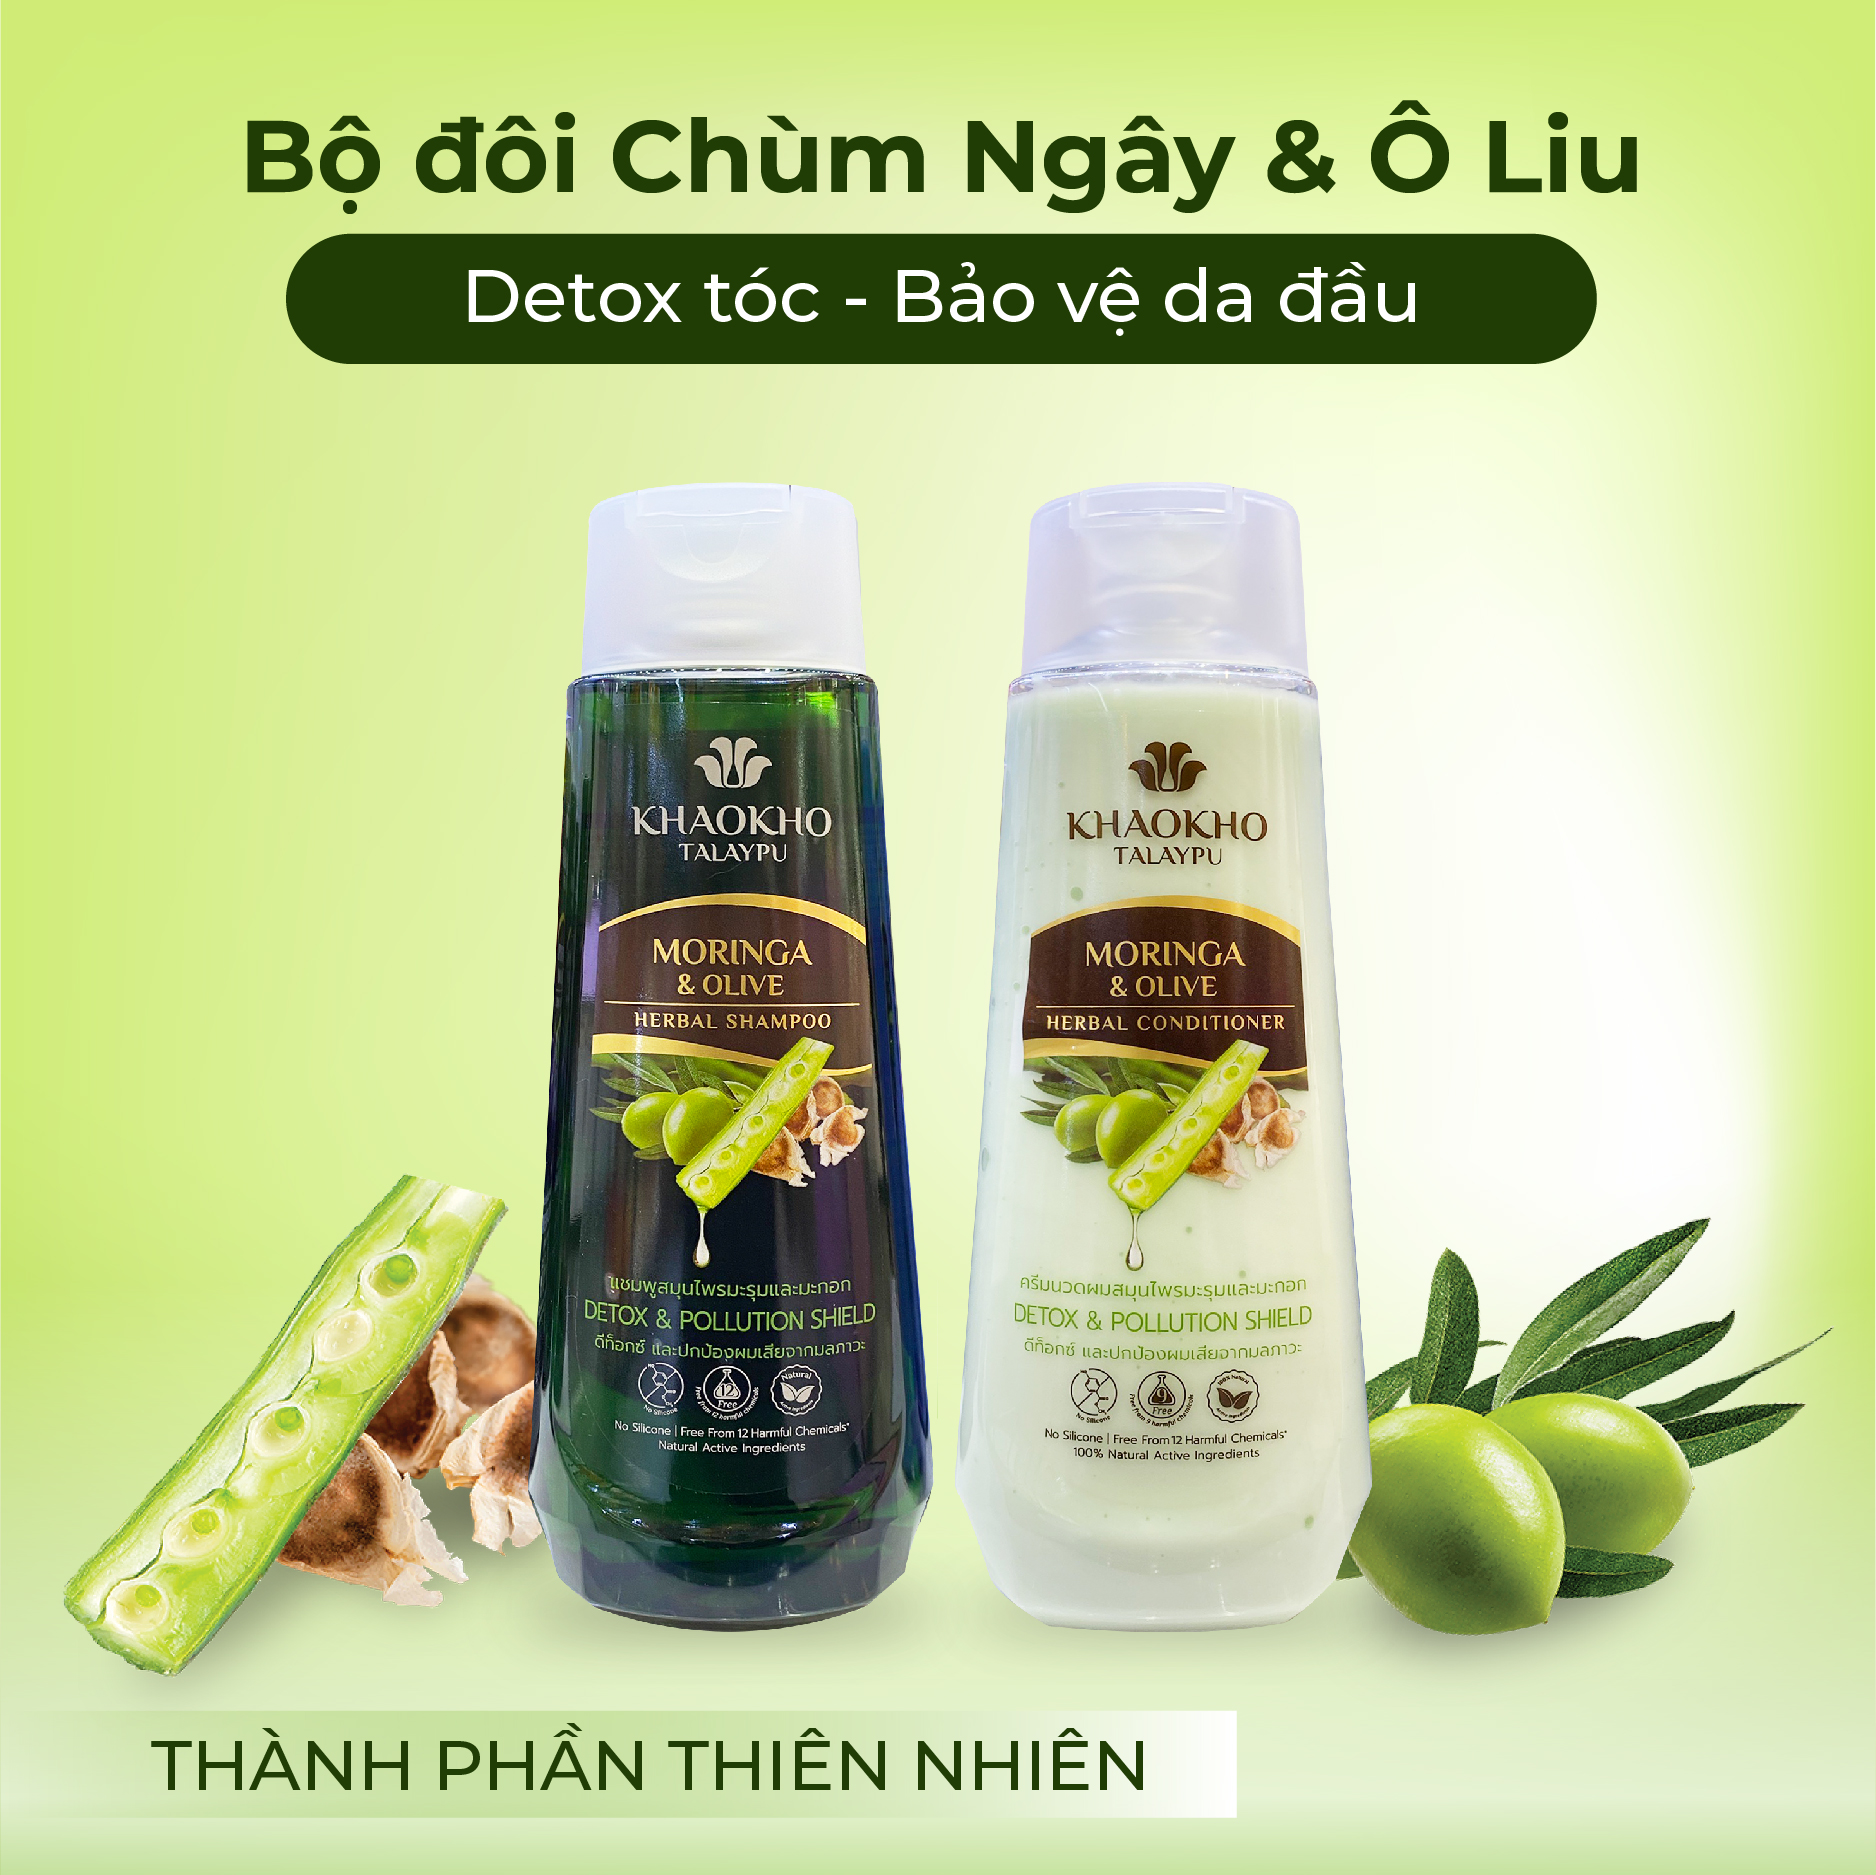 Khaokho Talaypu Moringa & Olive Herbal Shampoo 185ml